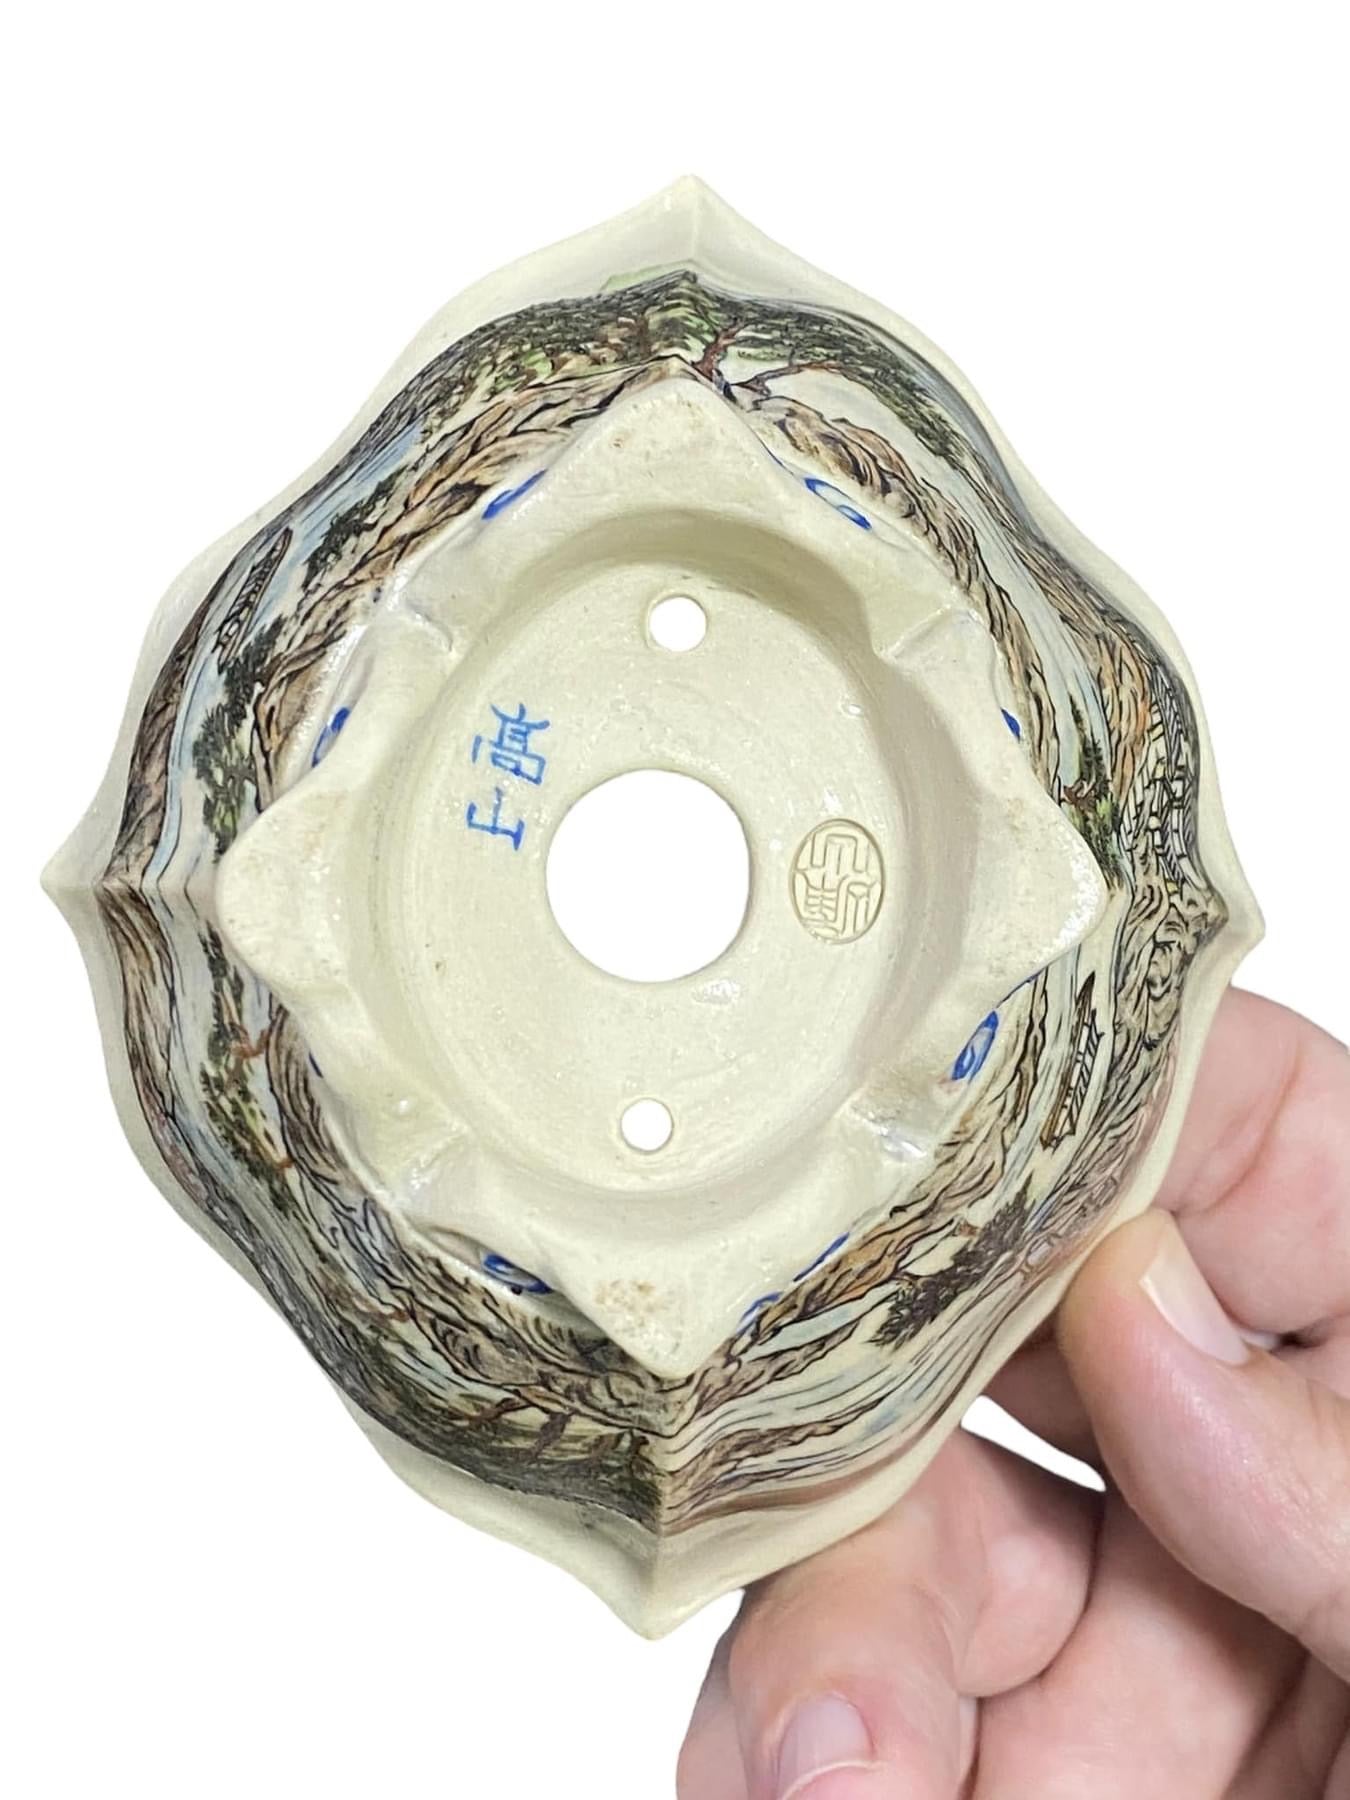 Kouzan - Exquisite Hand Painted Bonsai Pot (5-1/8” wide)